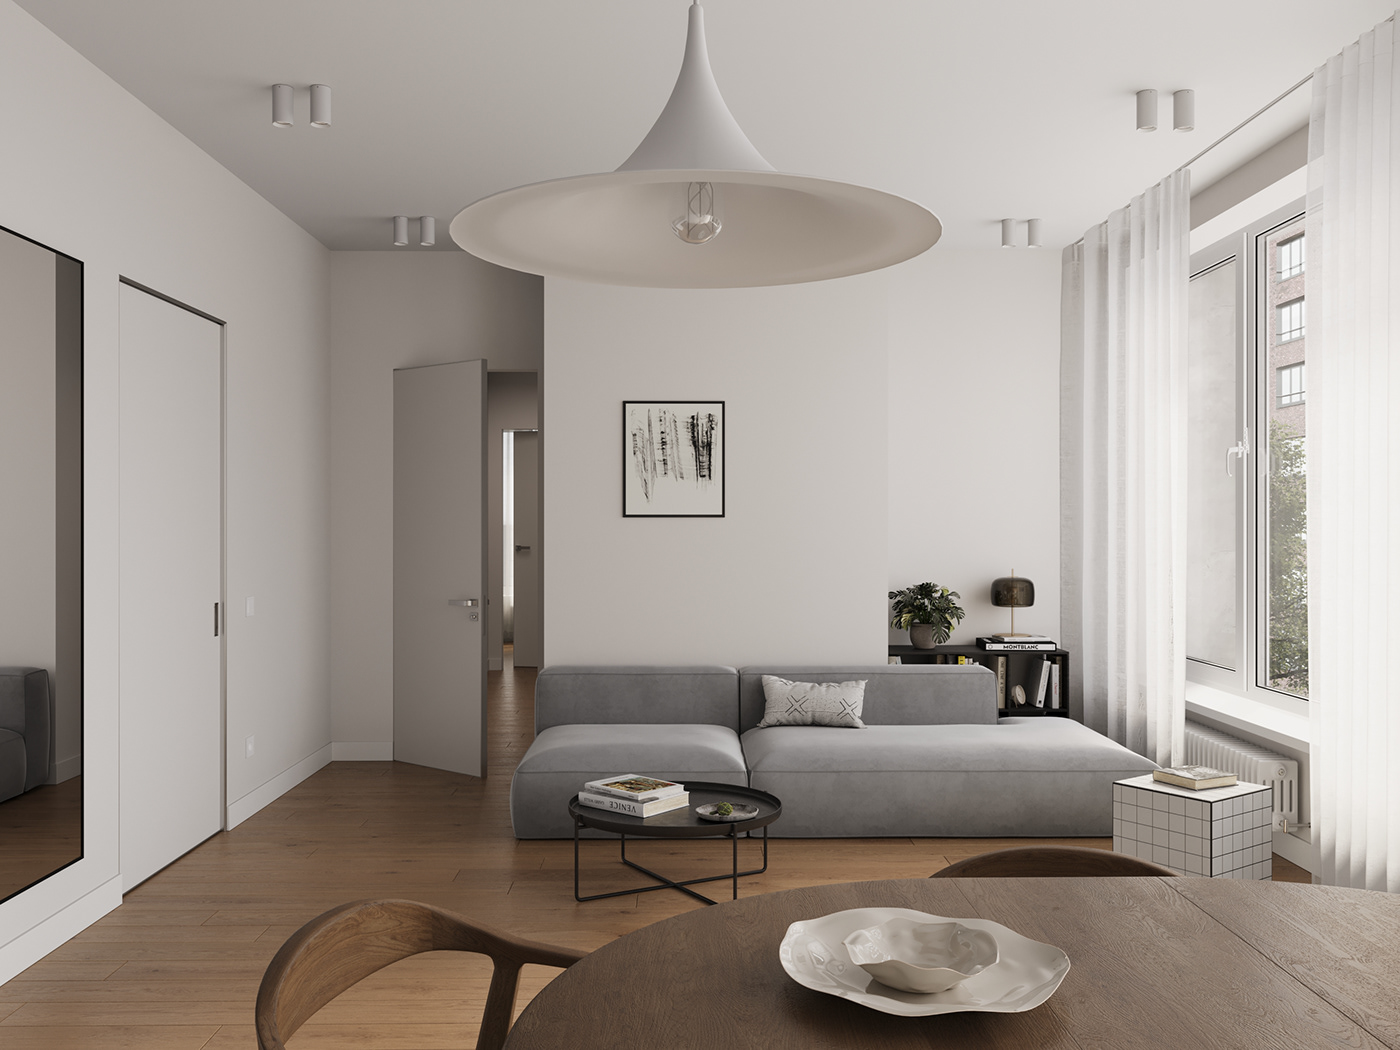 living room Scandinavian Minimalism simple interior design  kitchen интерьер visualization 3ds max кухня-гостиная